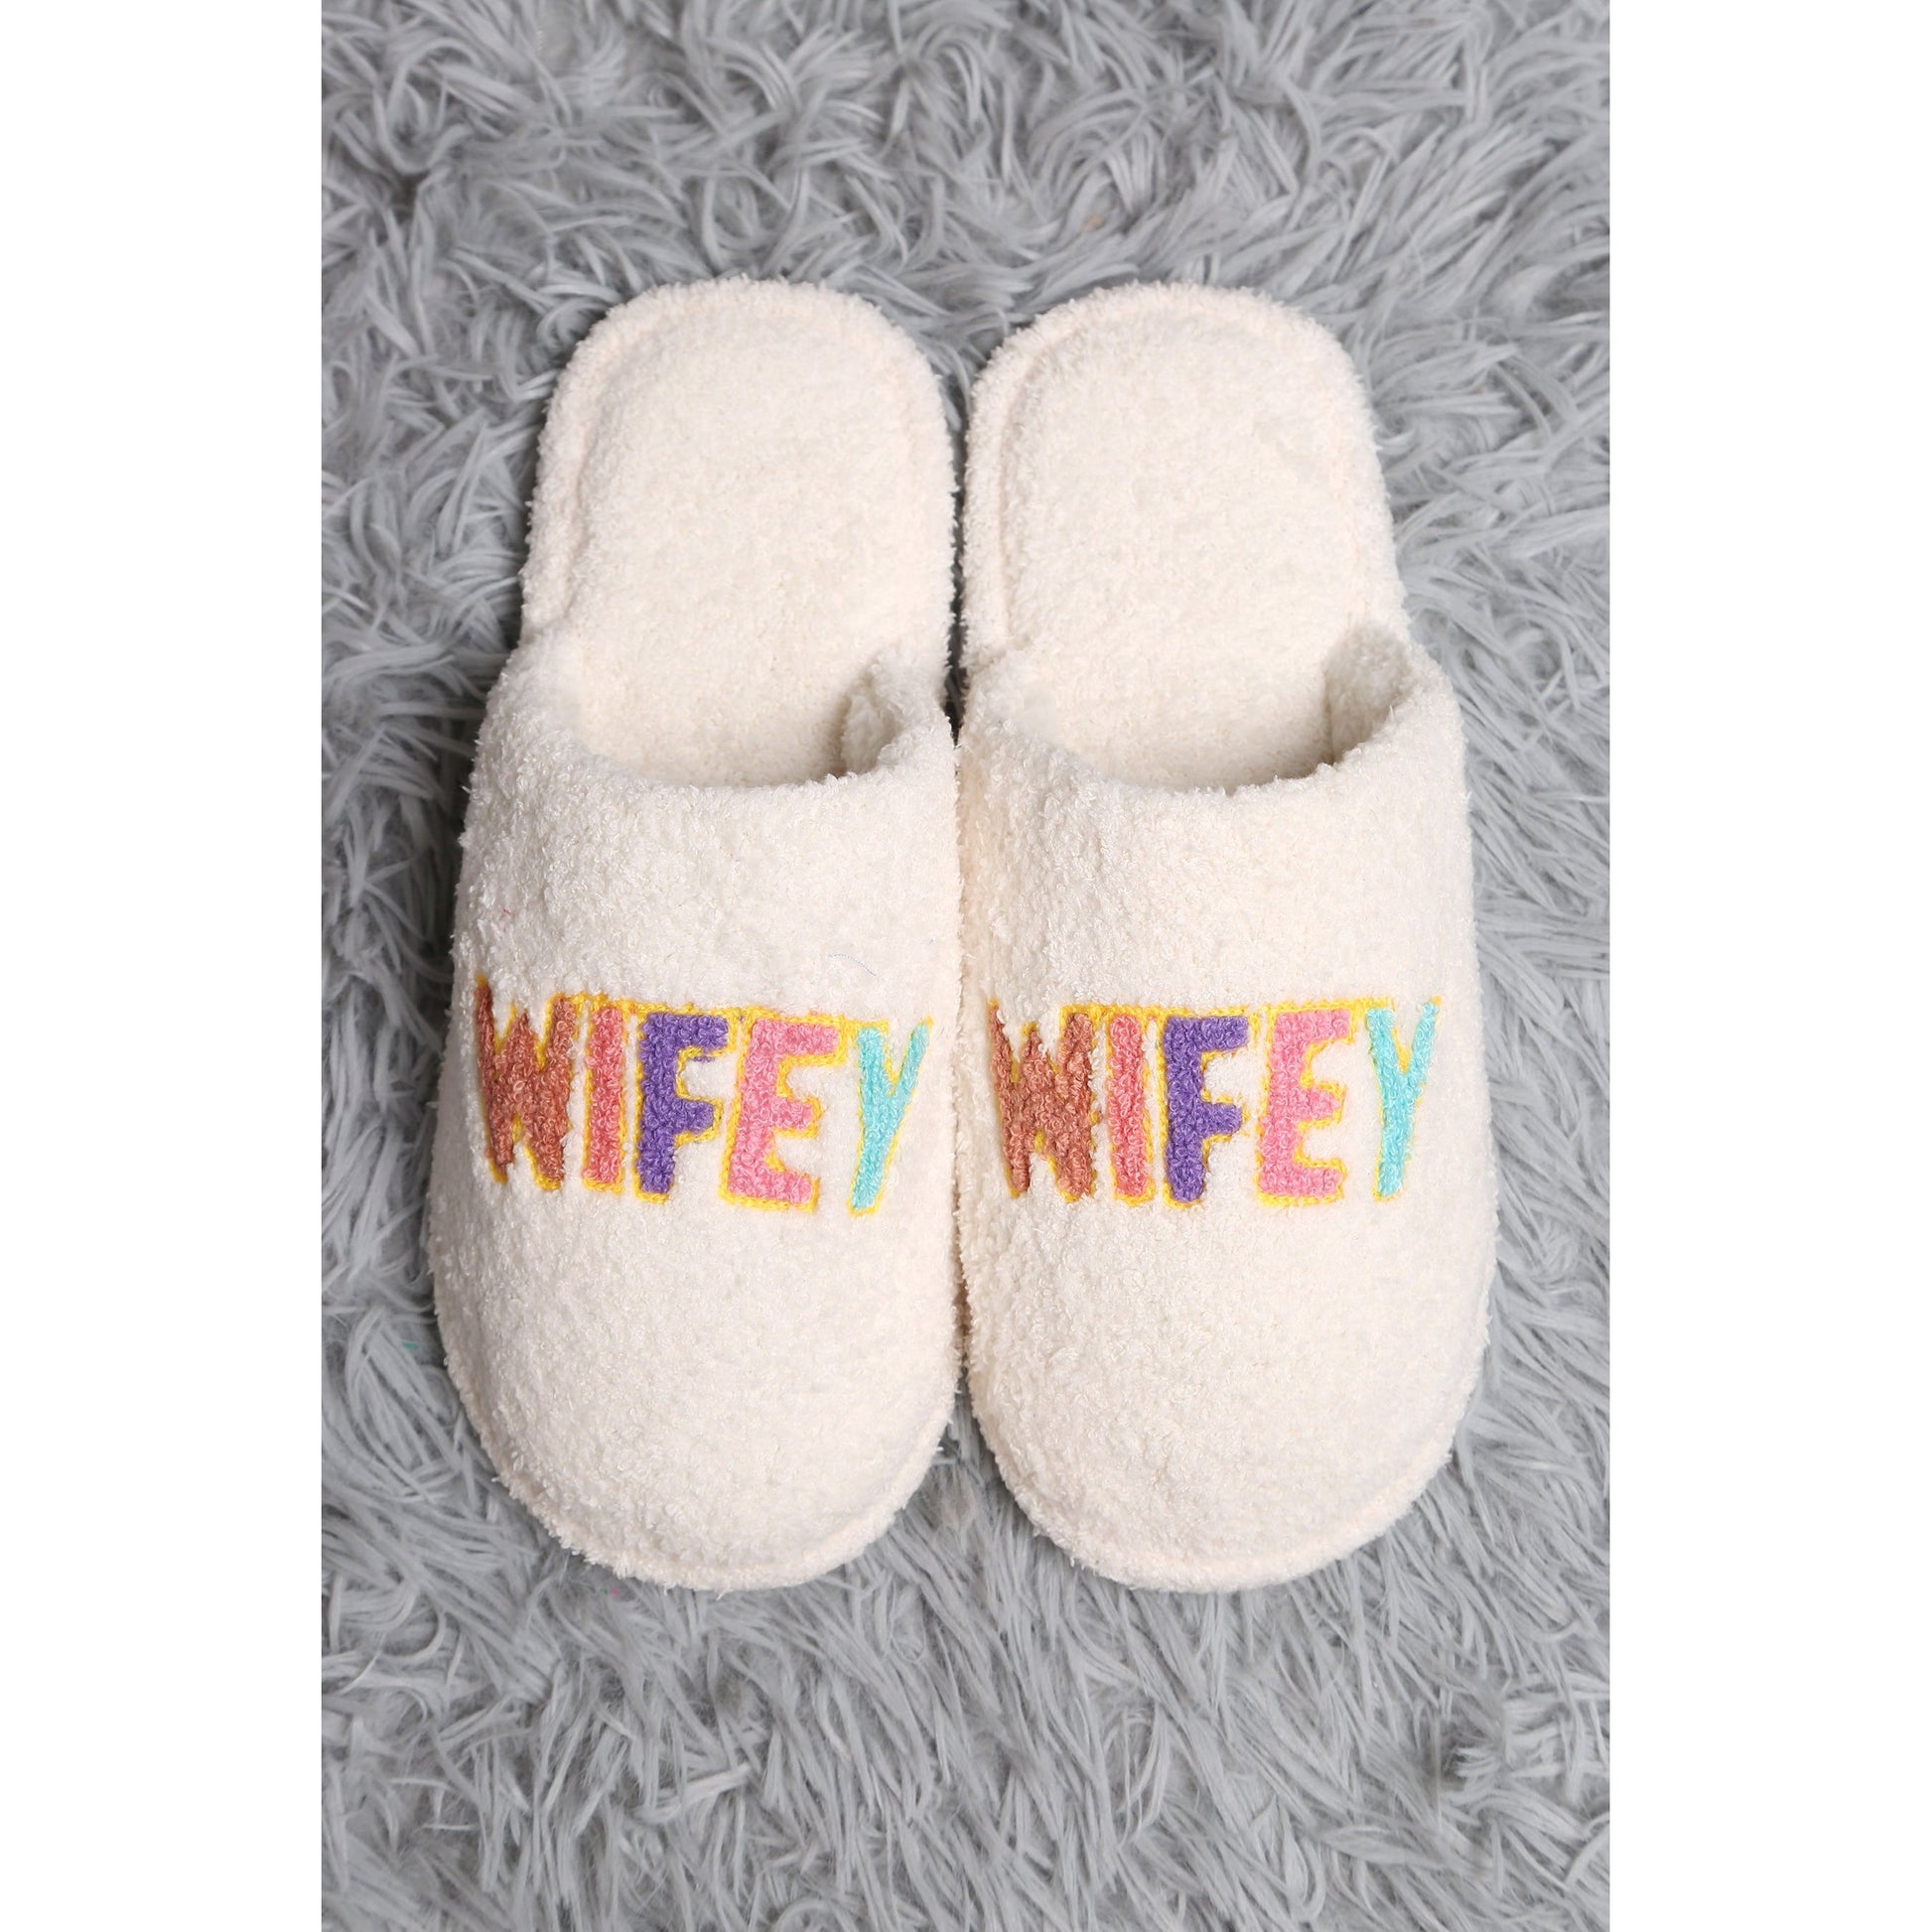 Wifey Embroidered Slipper - Desert Dreams Boutique